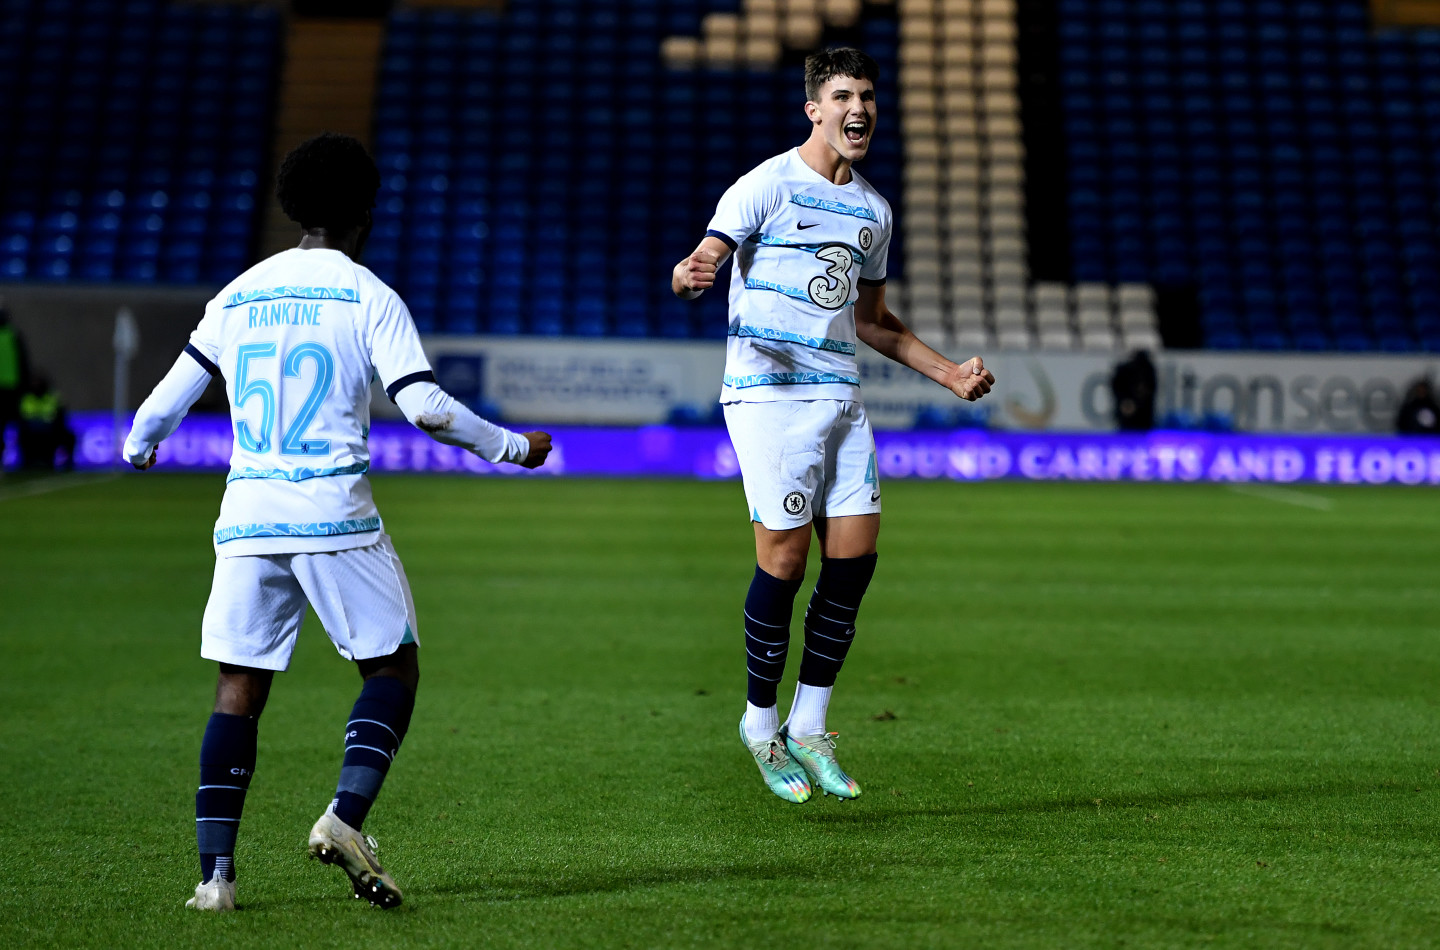 Under-21s Peterborough game postponed - Bristol City FC